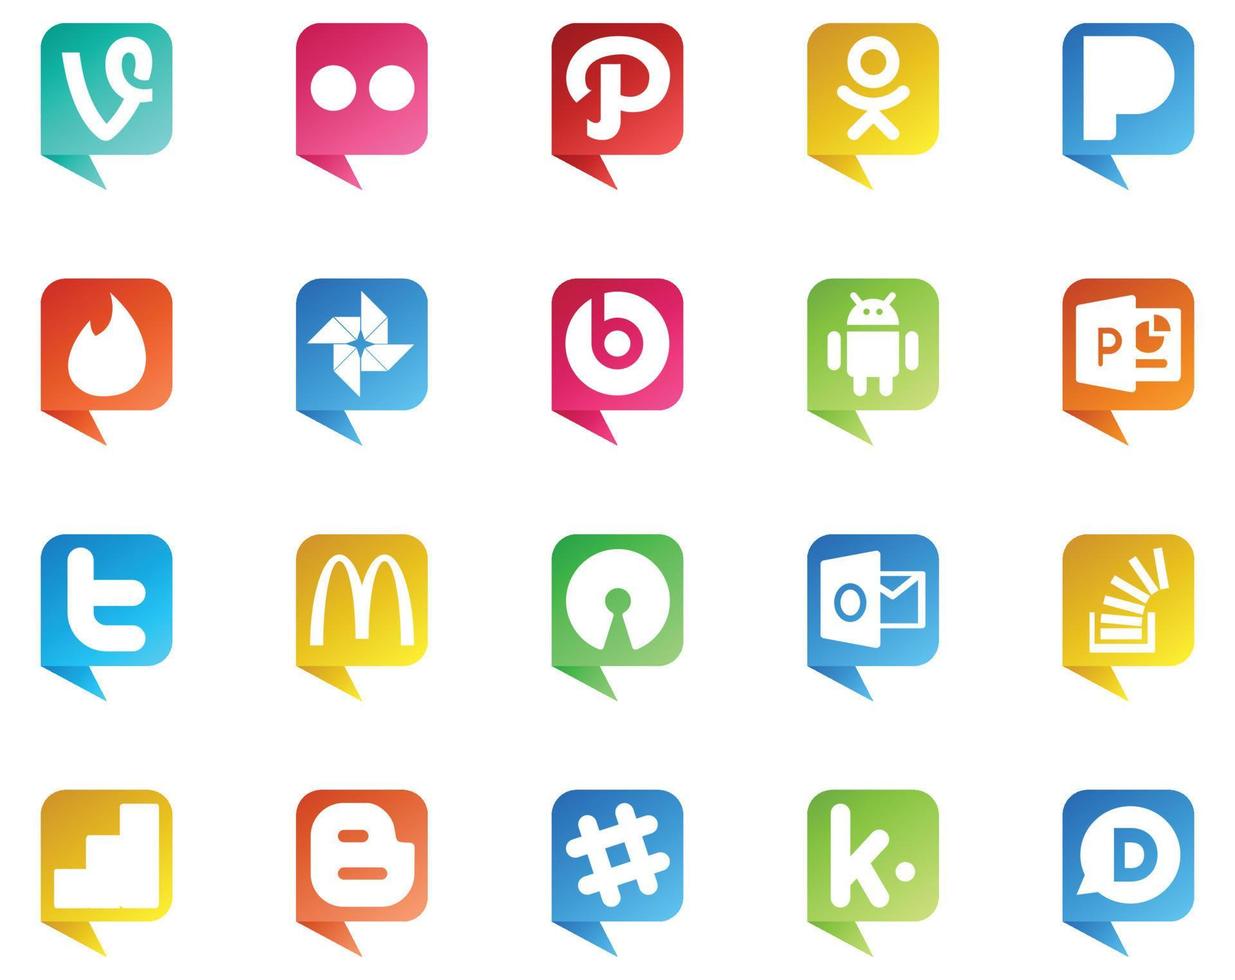 20 logotipo de estilo de burbuja de discurso de redes sociales como stock stockoverflow android Outlook mcdonalds vector